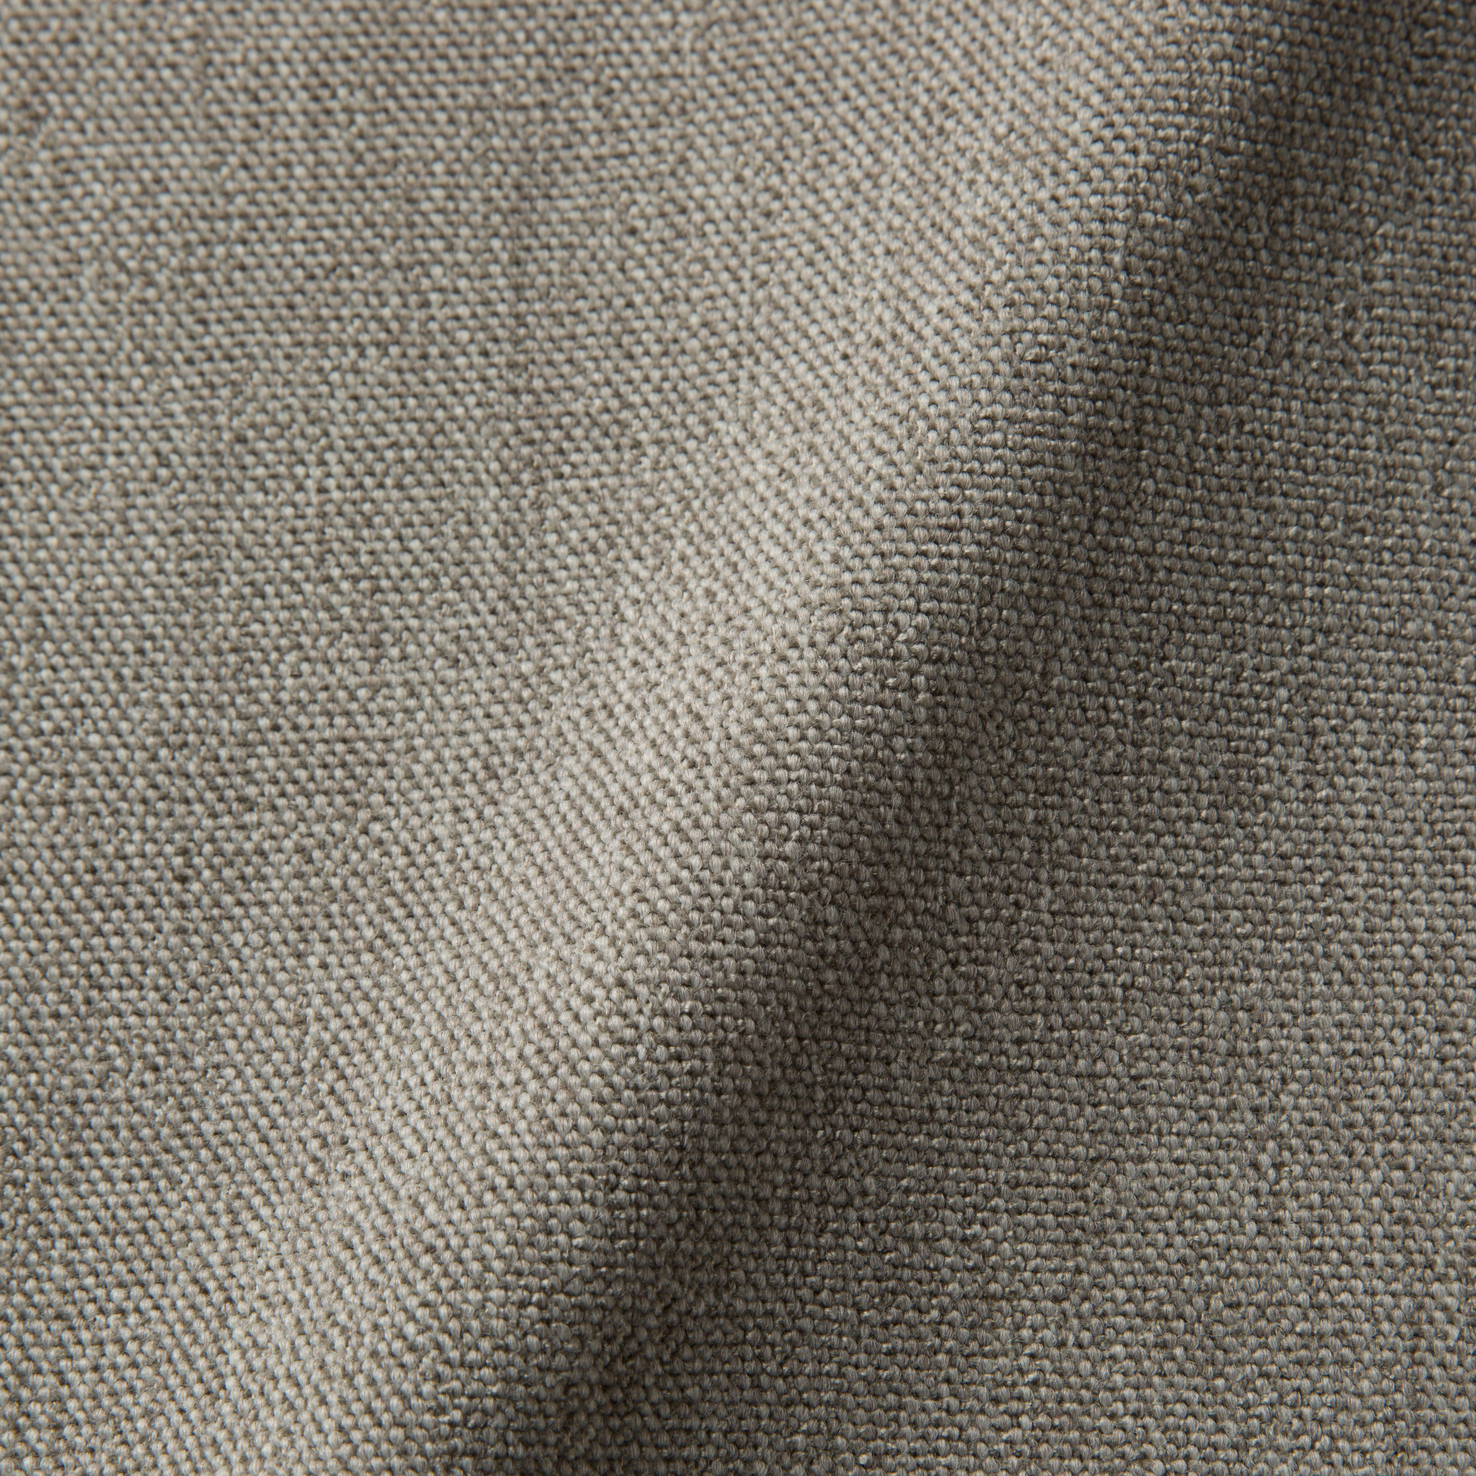 Fabric sample Justo Muse brown